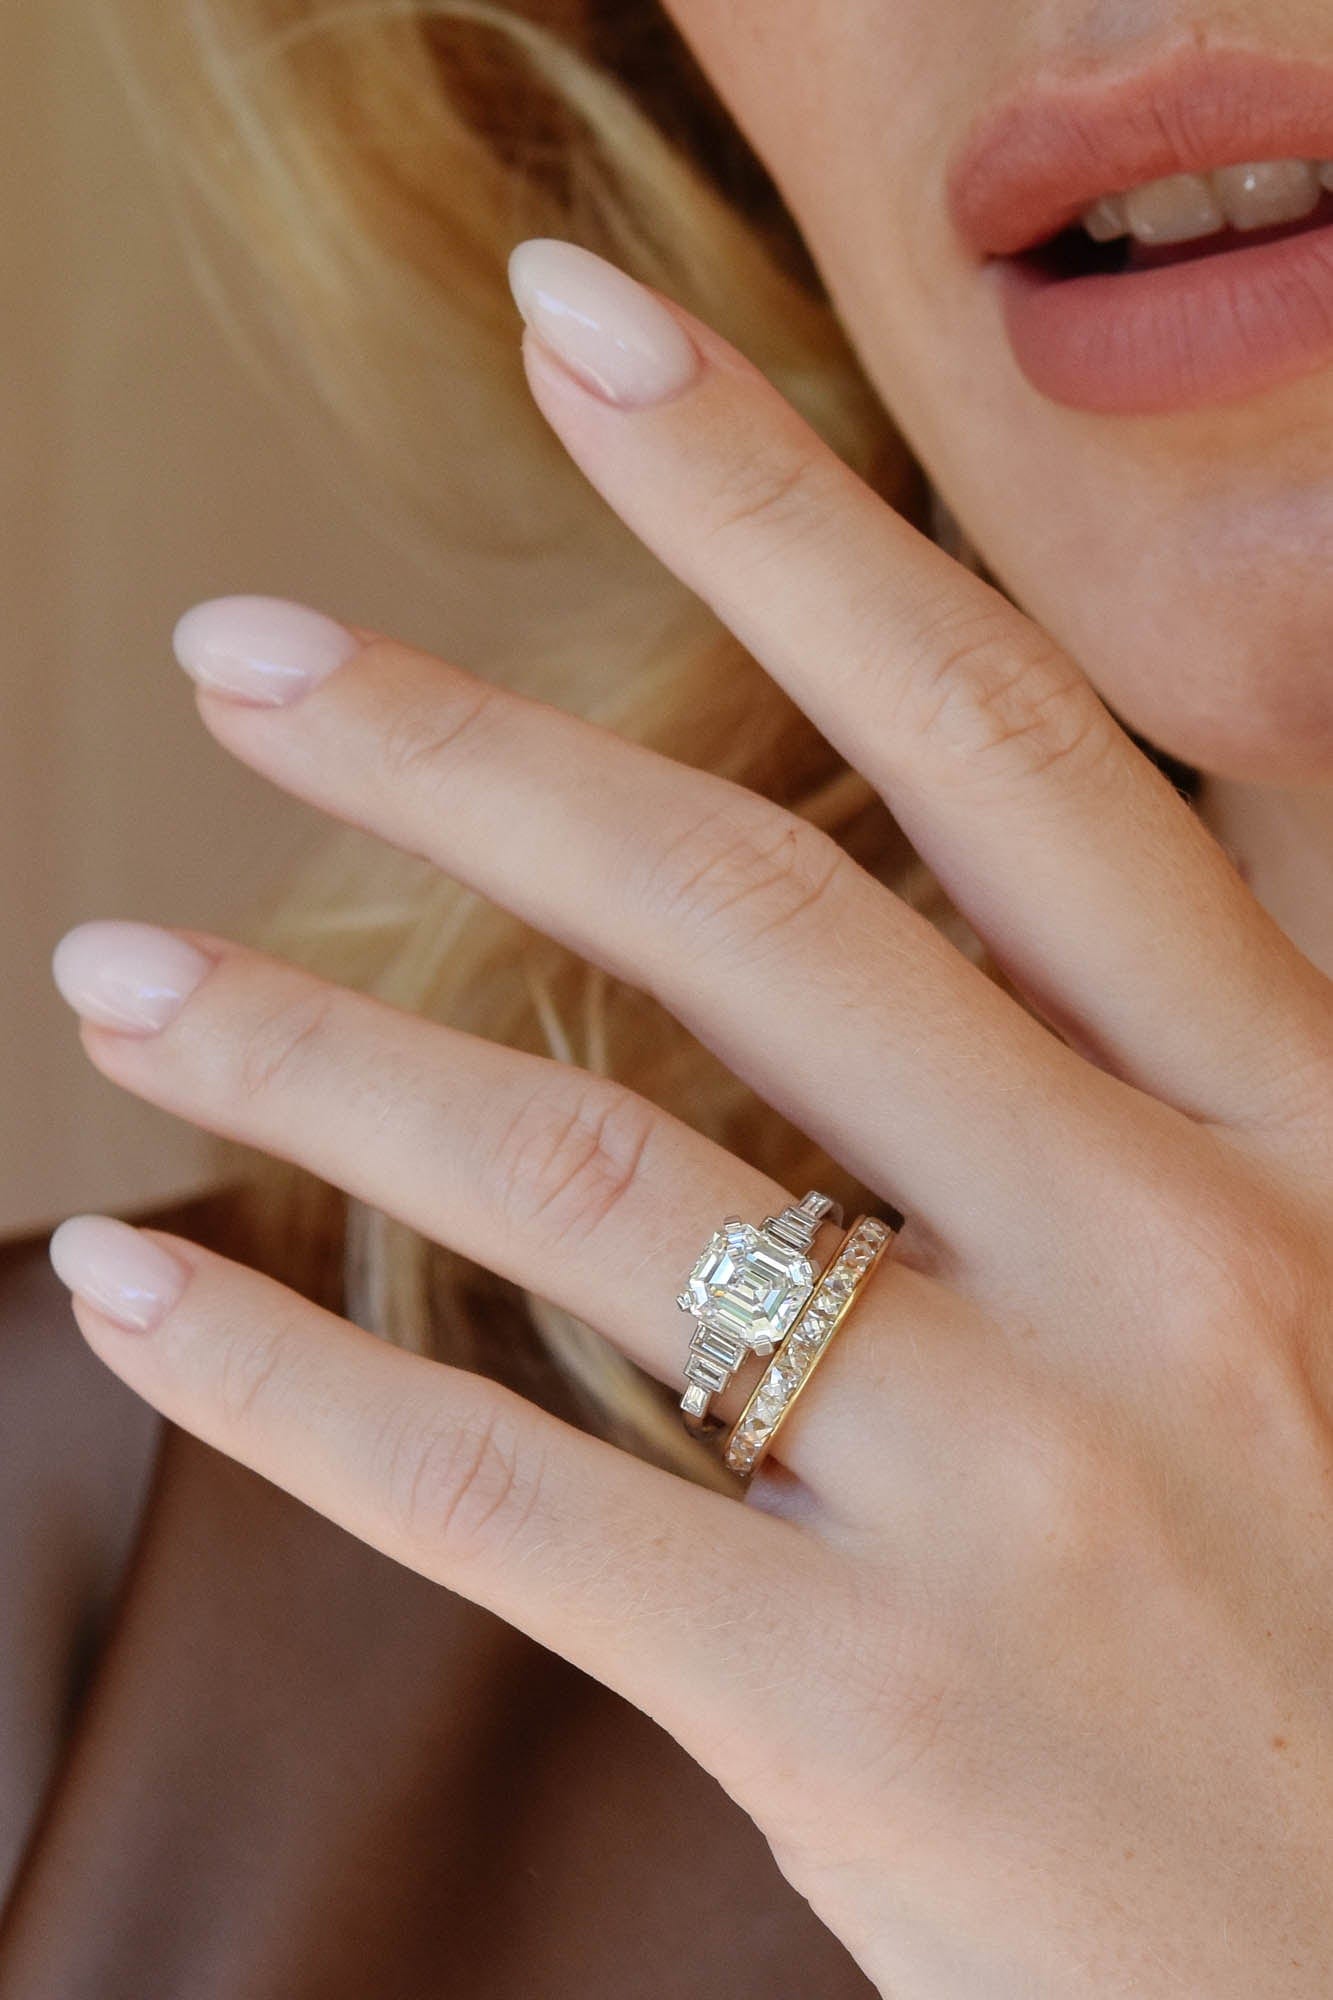 Square Halo Diamond Ring - Modern Engagement Rings